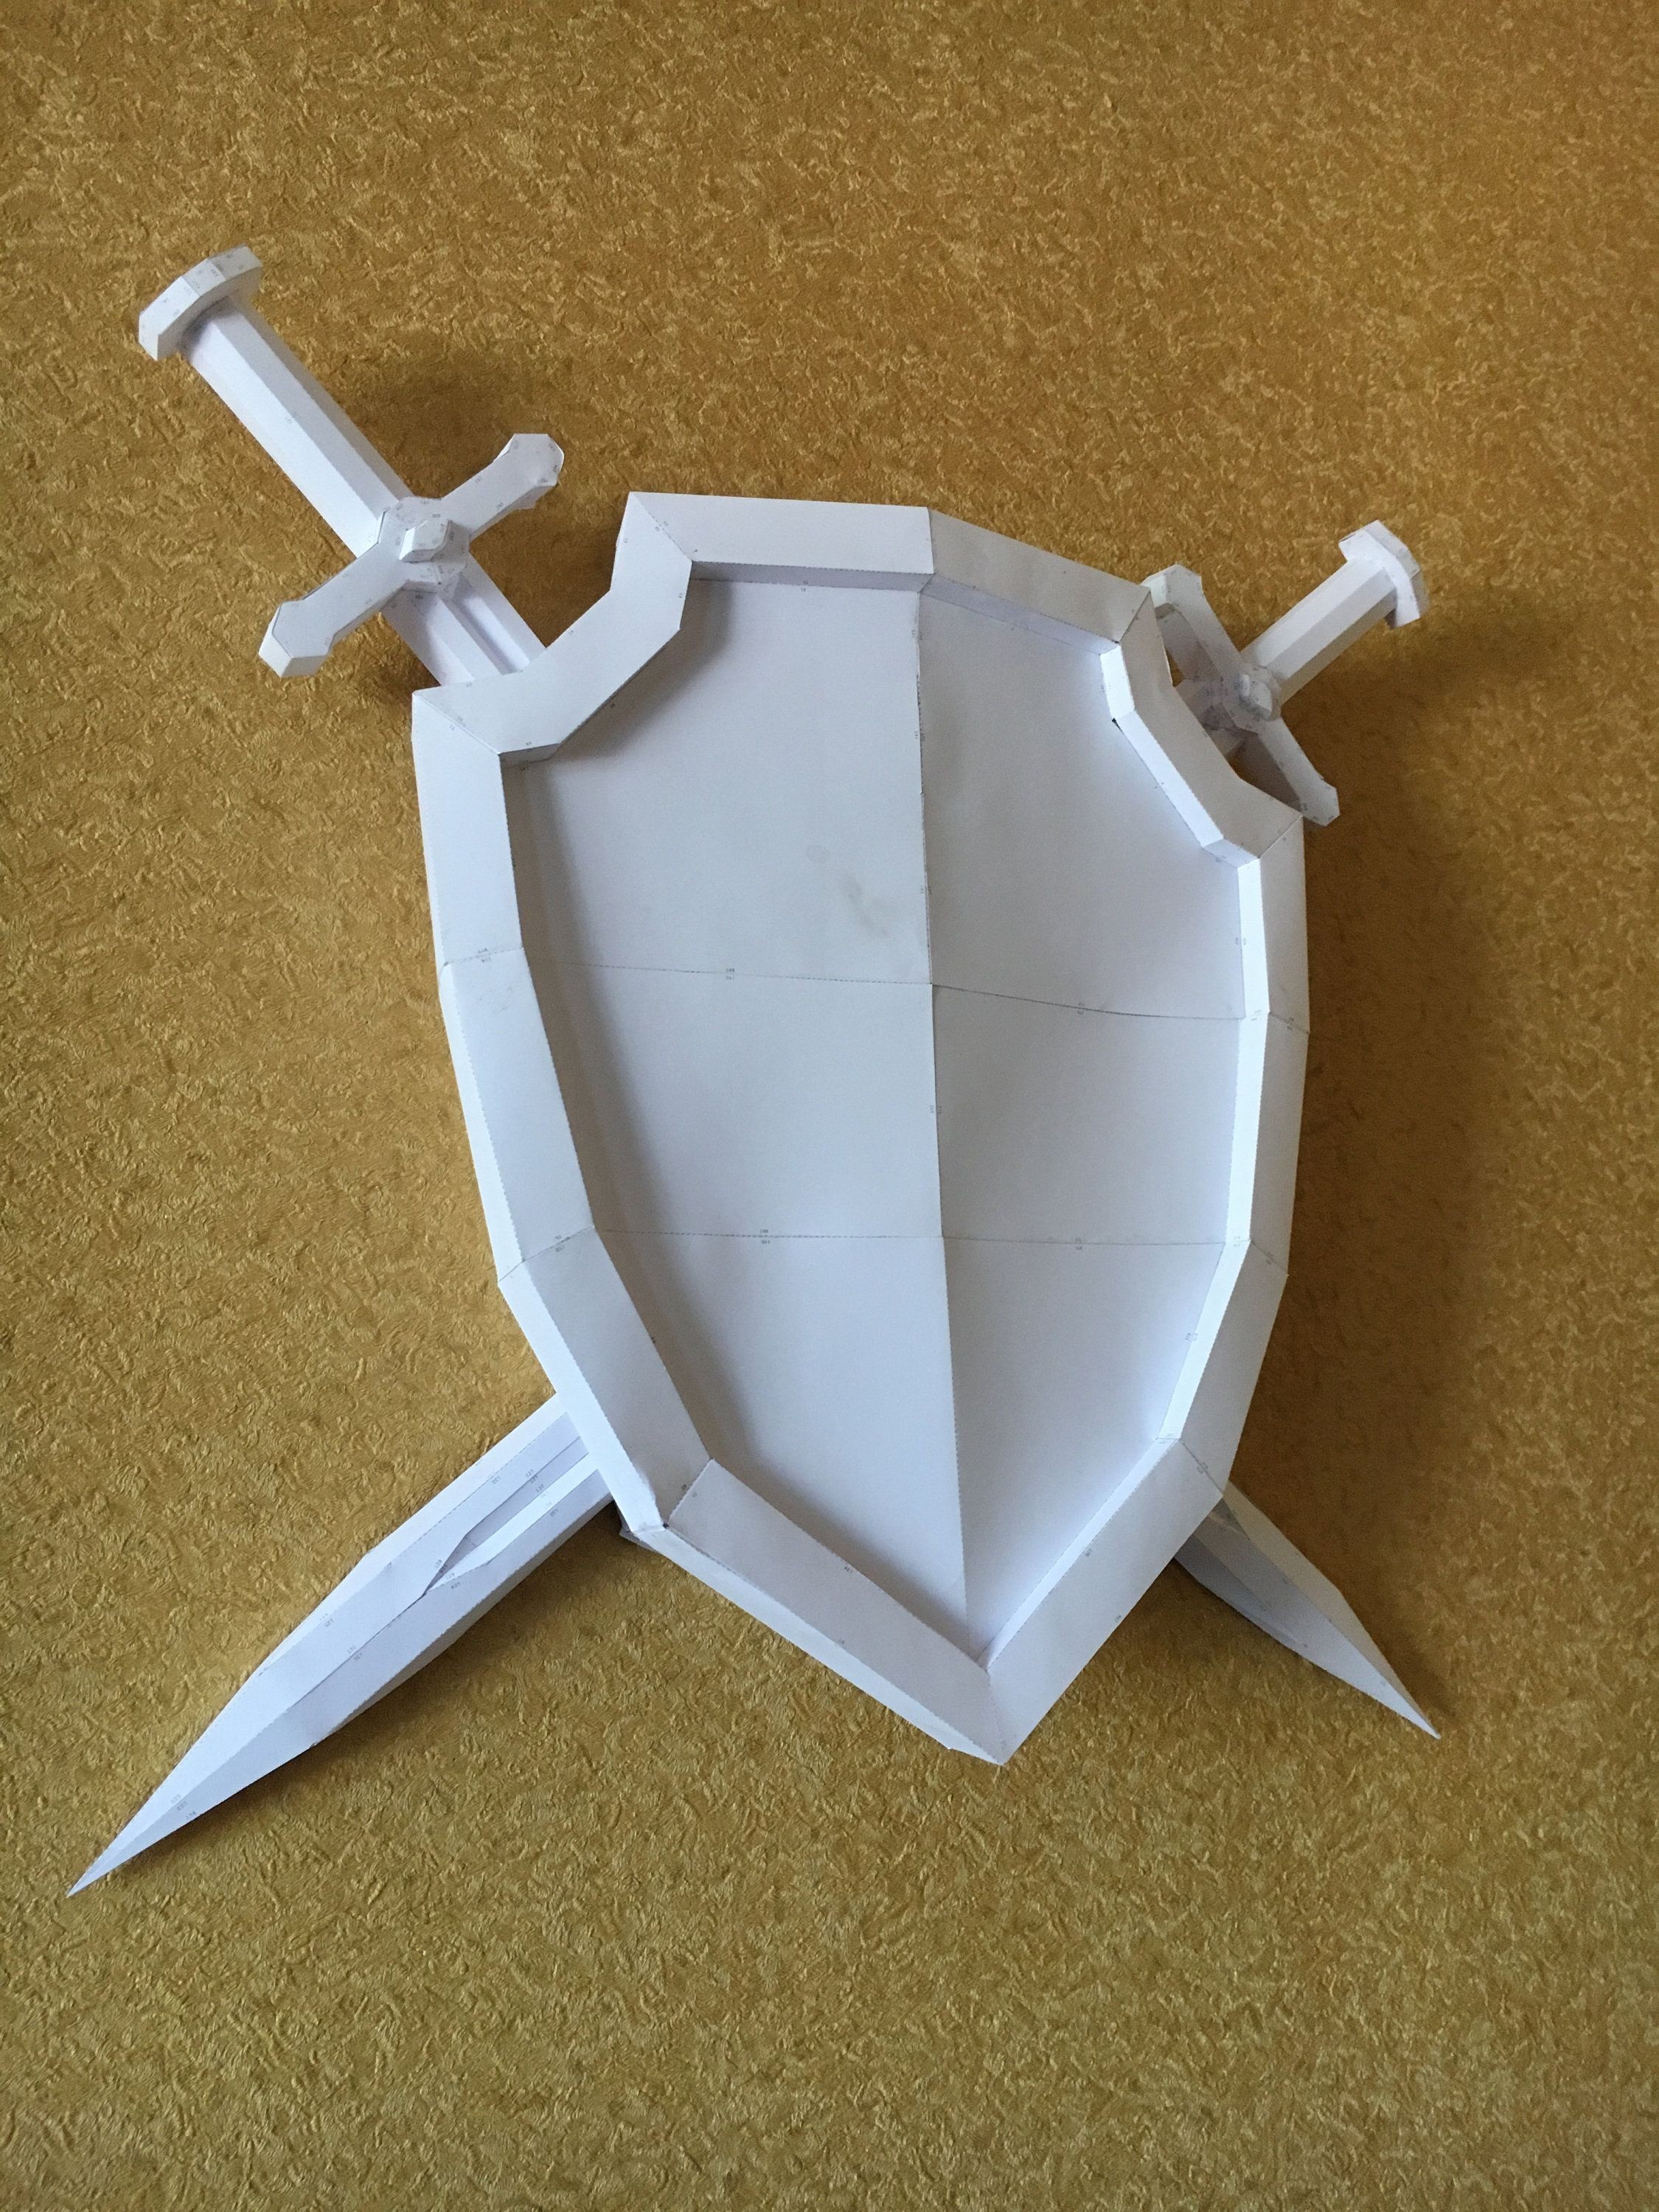 Papercraft Fish Sword Shield Diy Papercraft Model ÐÑÐ¼Ð°Ð¶Ð½ÑÐµ Ð¸Ð·Ð´ÐµÐ Ð¸Ñ